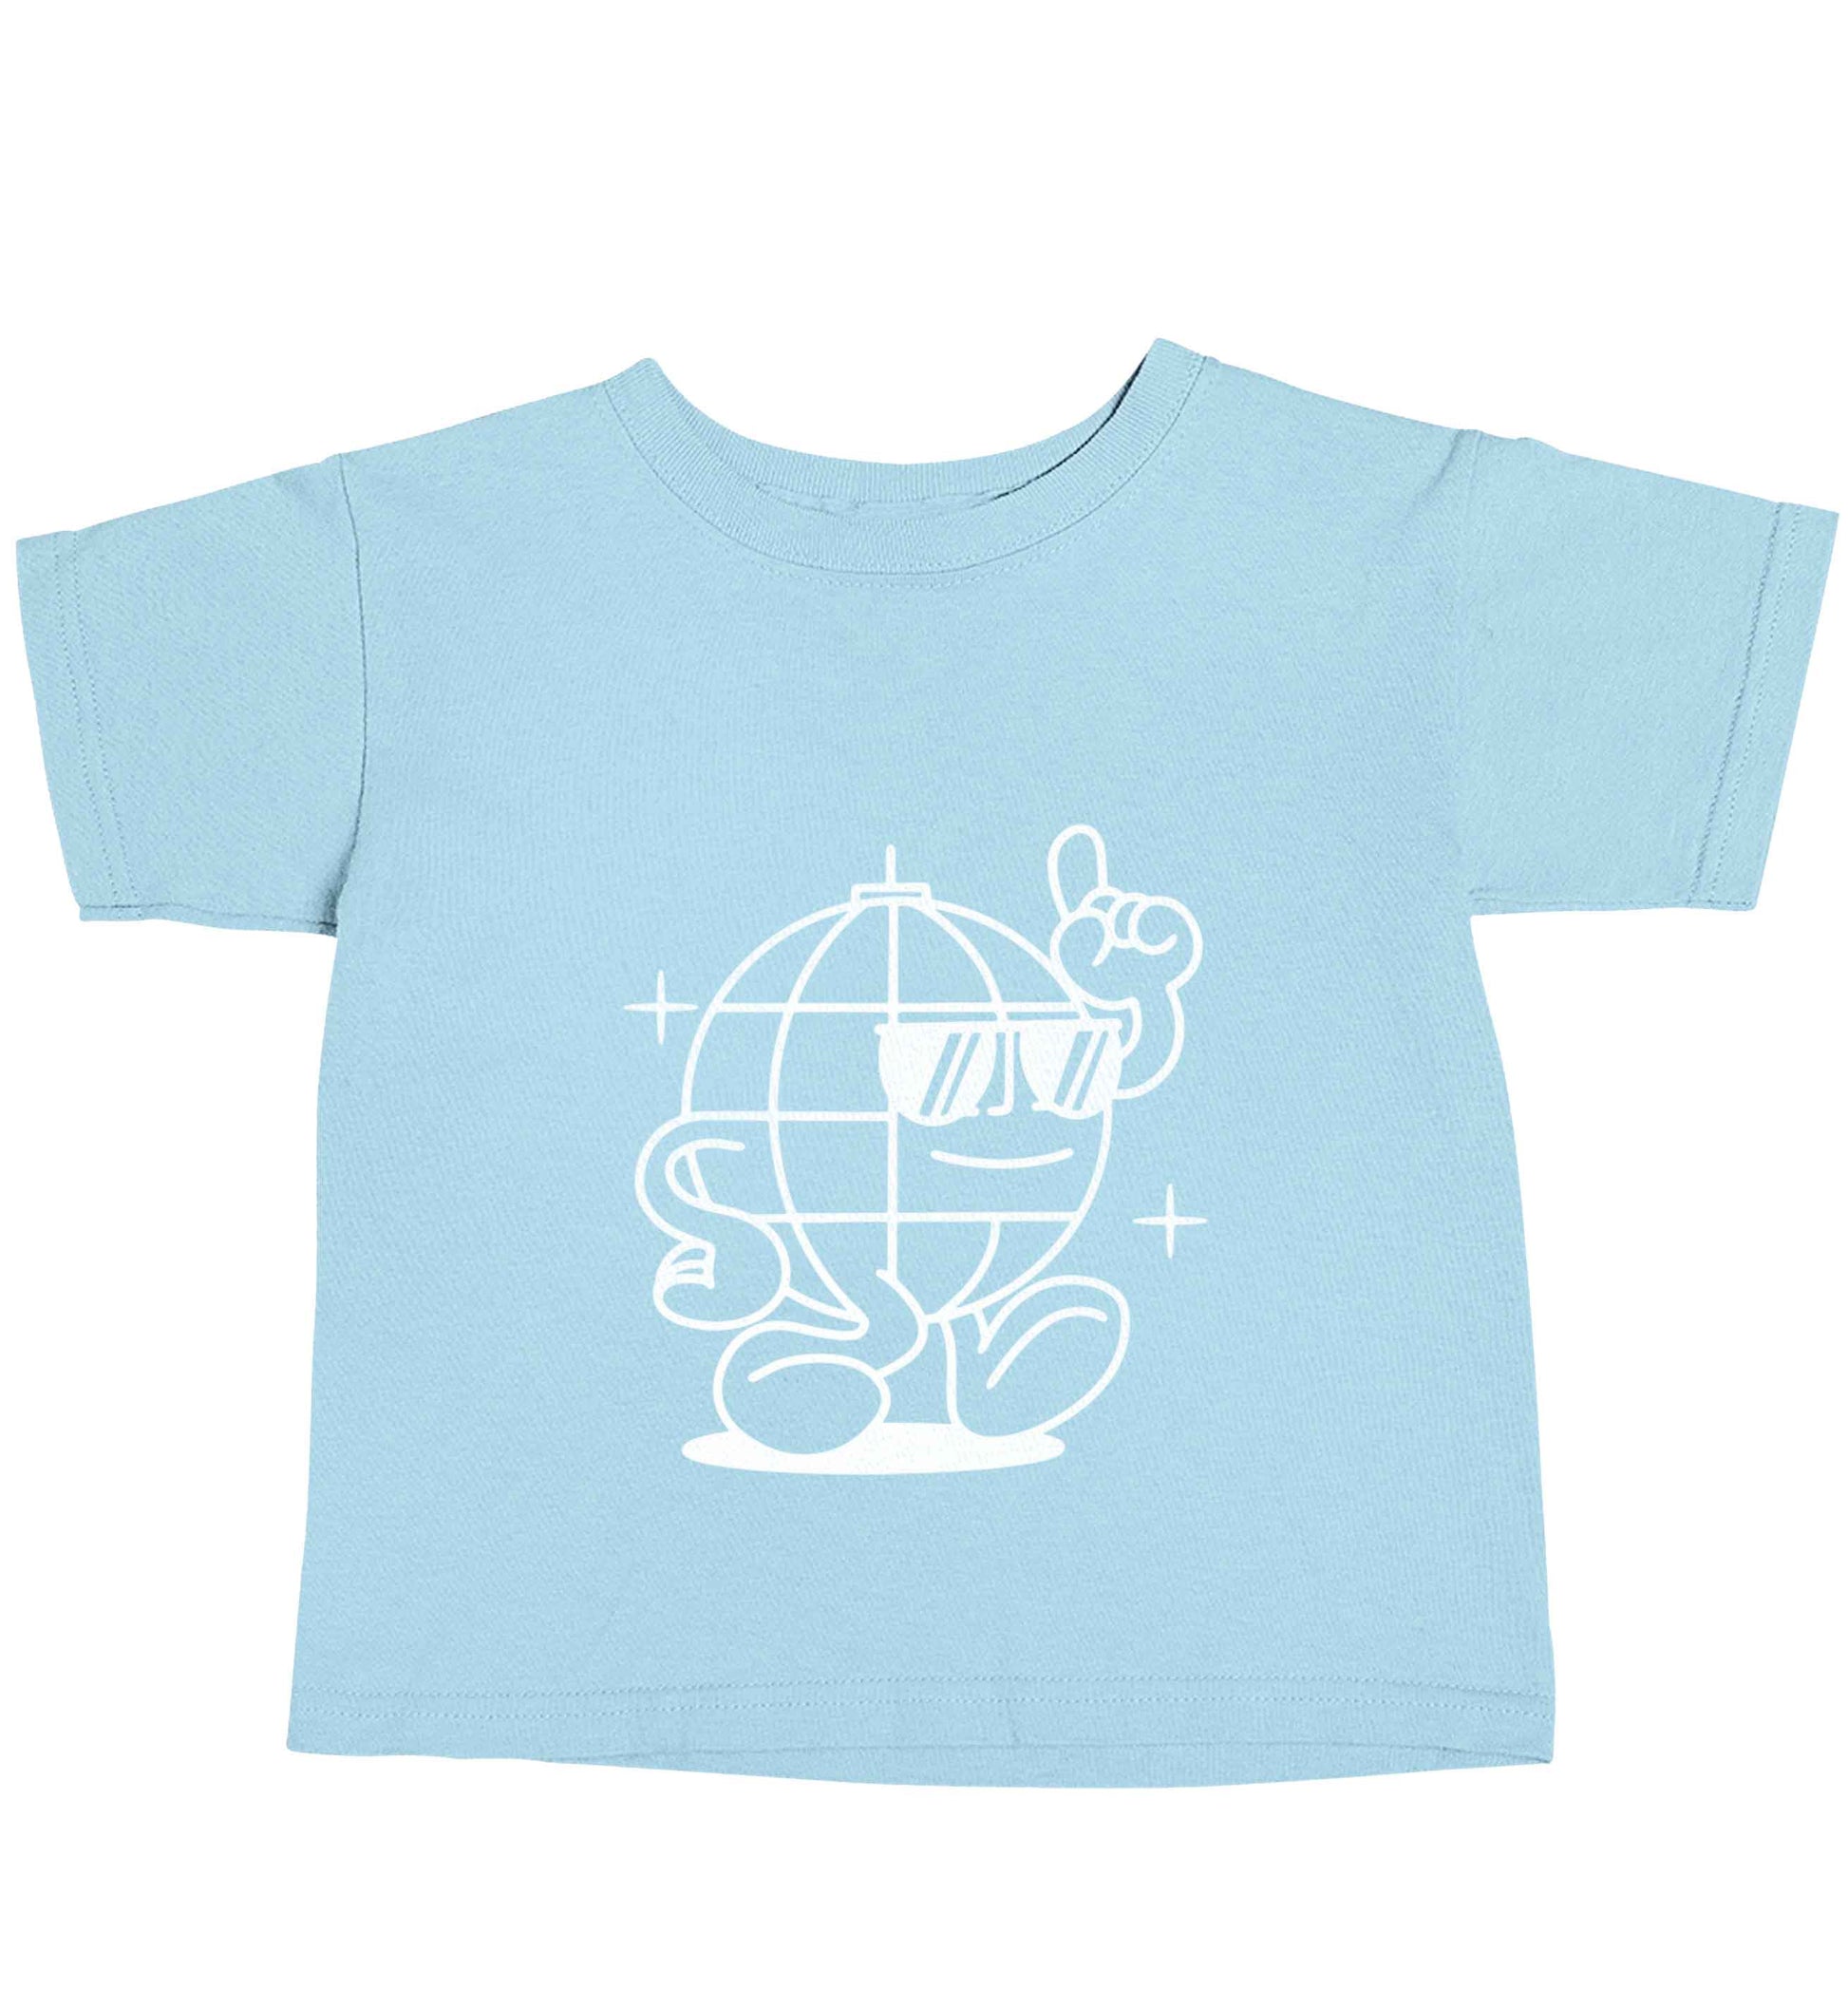 Disco ball light blue baby toddler Tshirt 2 Years